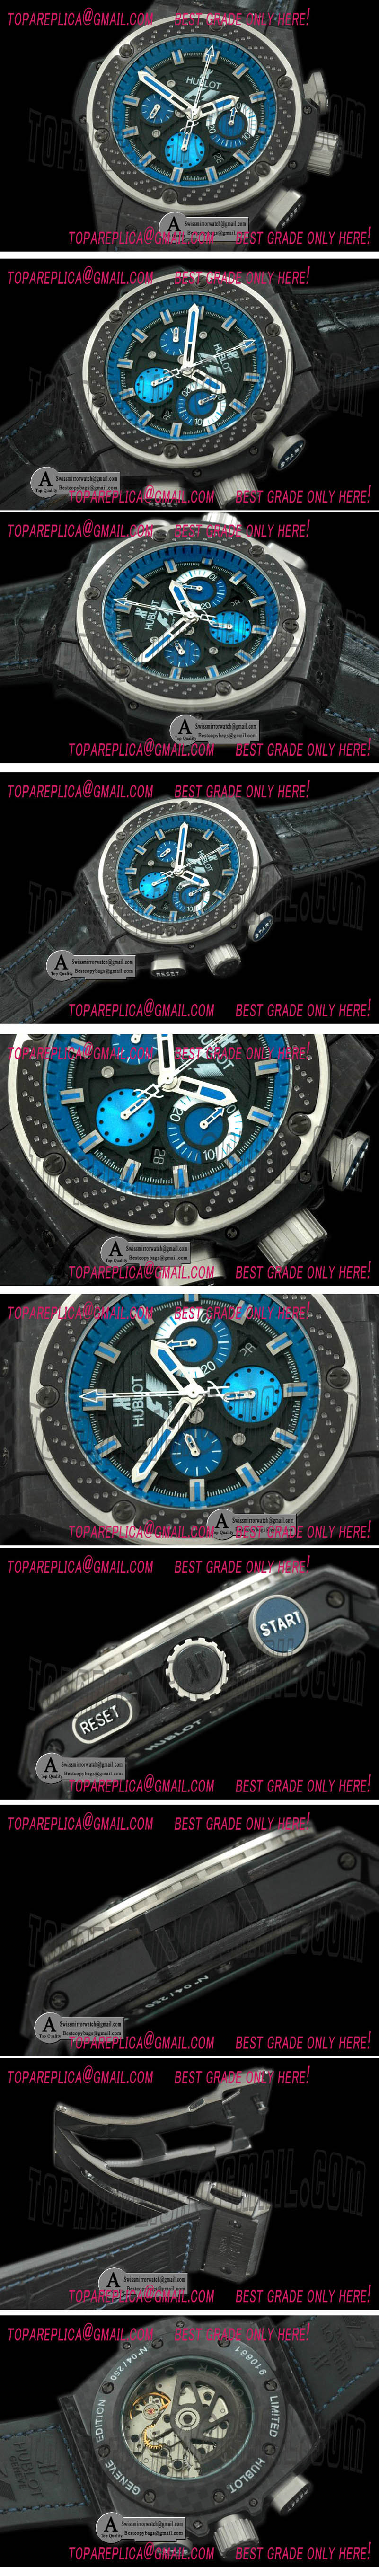 Hublot King Power F1 Interlago SS/Leather Black/Blue A-7750 28800bph Replica Watches